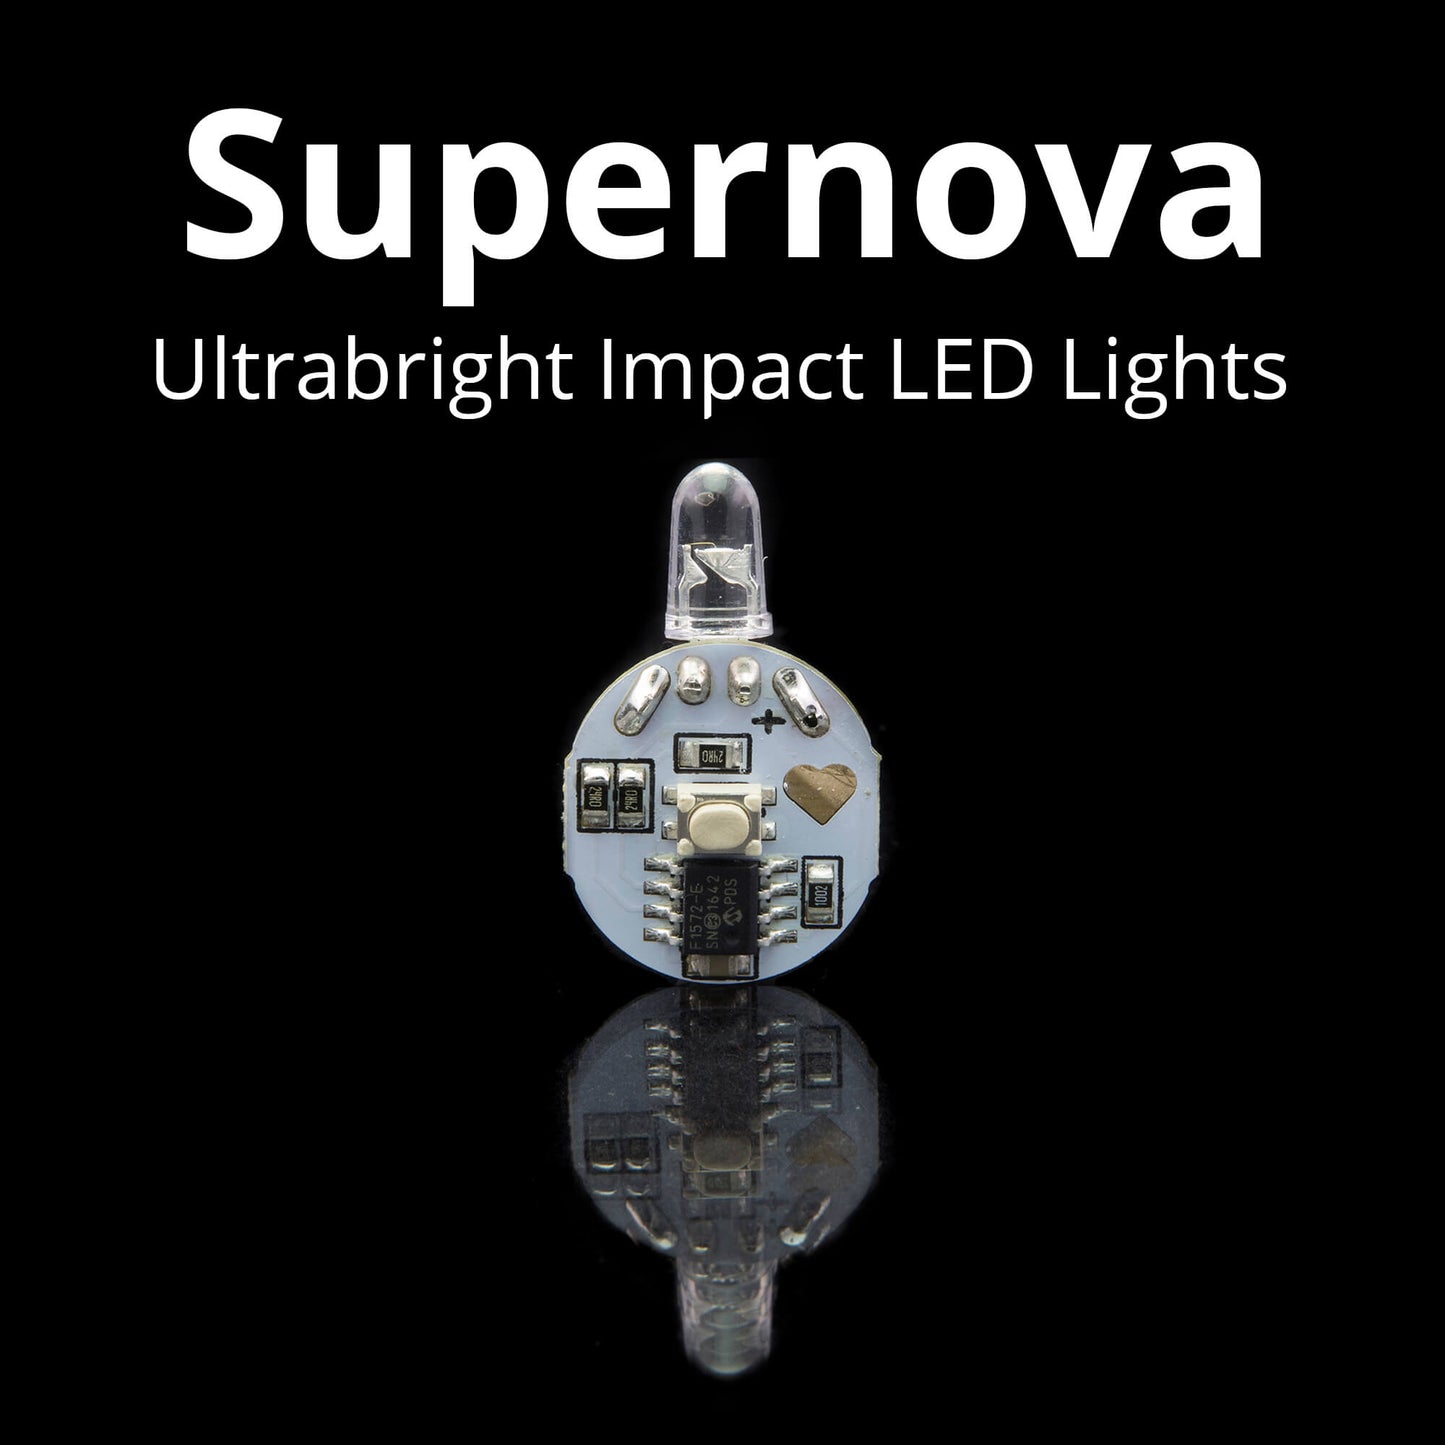 Supernova Ultrabright Impact LED Lights